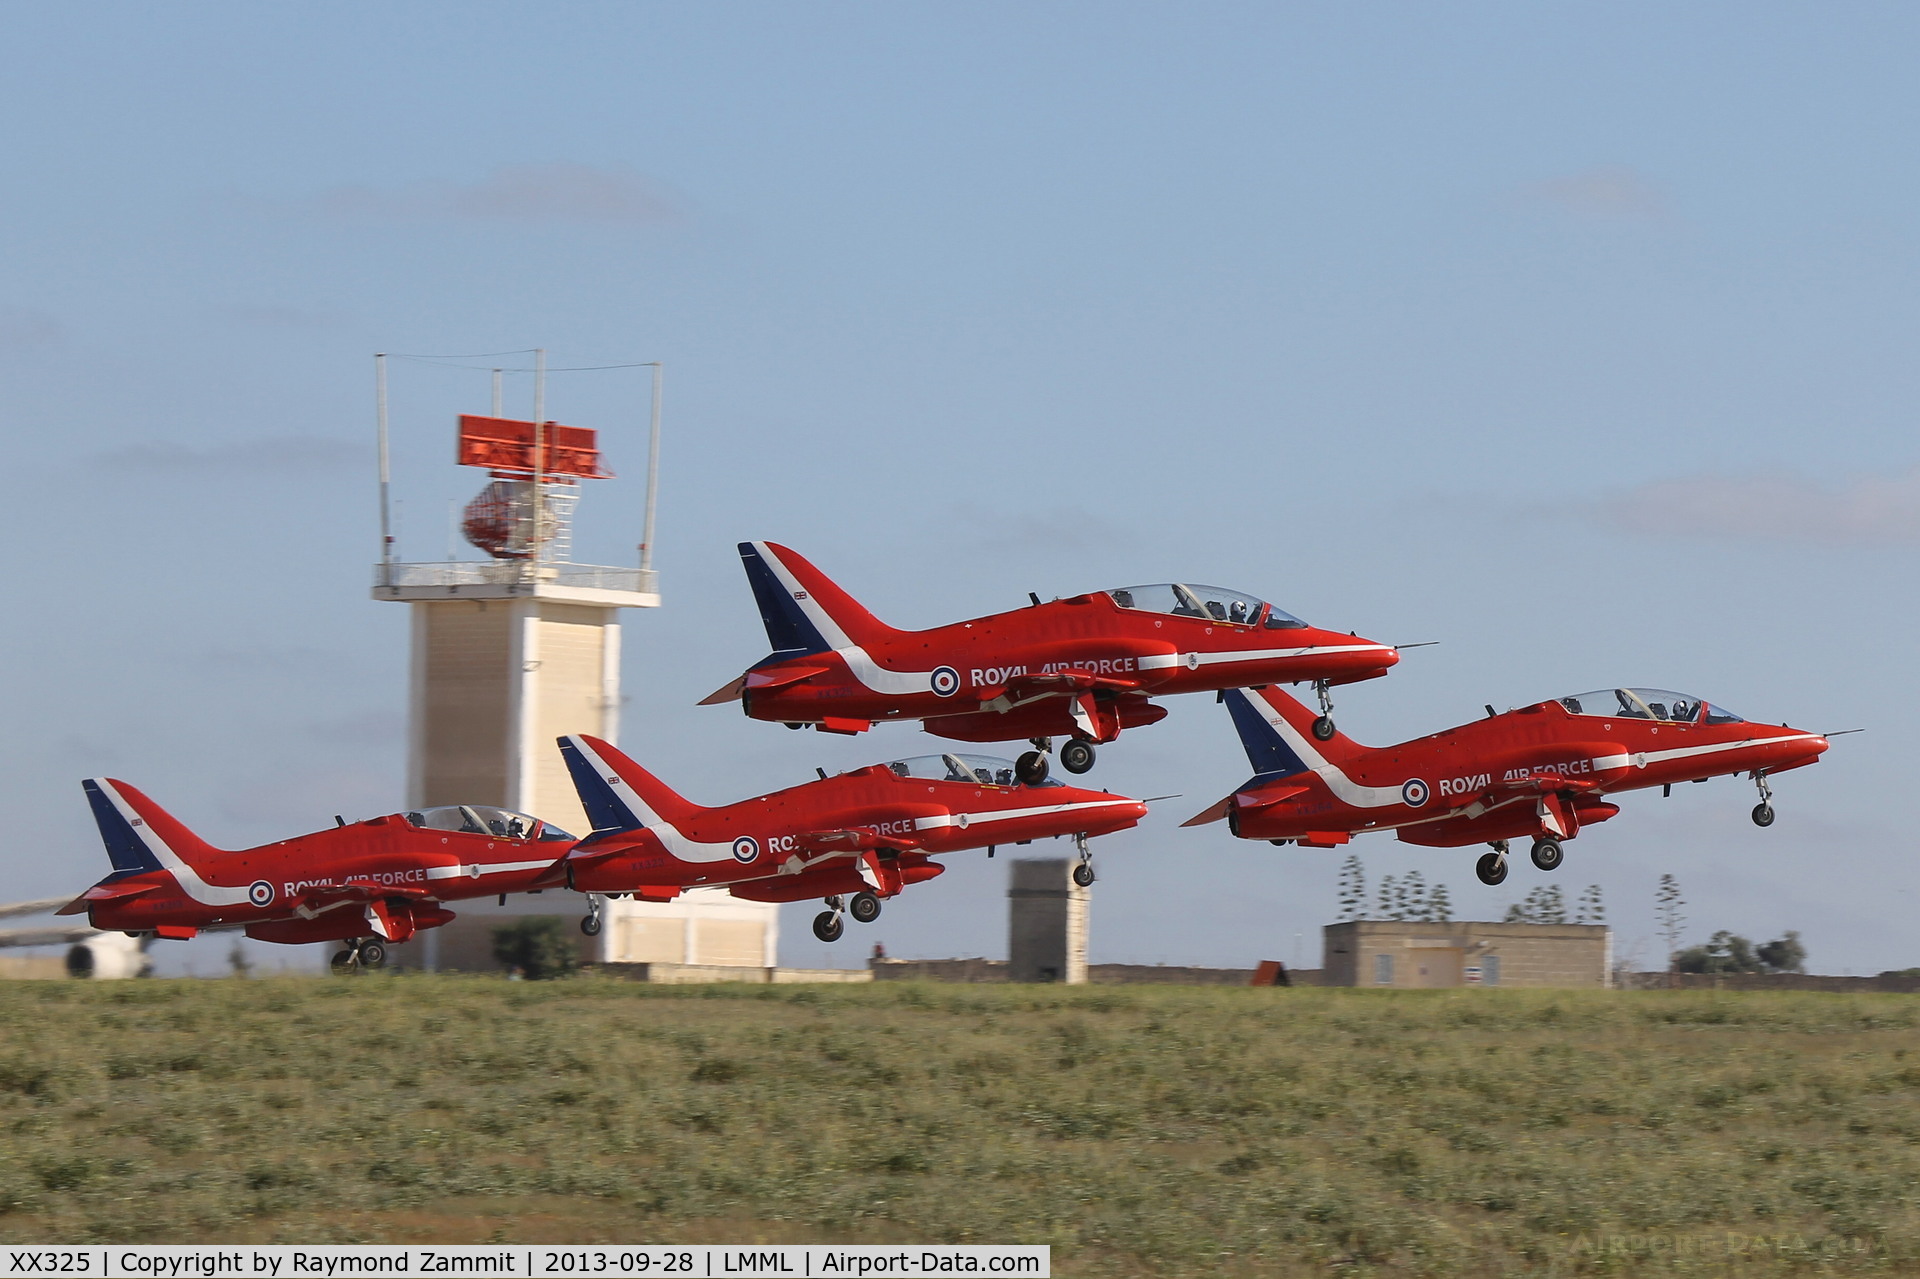 XX325, 1980 Hawker Siddeley Hawk T.1 C/N 169/312150, Red Arrows Hawks taking off to perform in the Malta ~International Airshow 2013.